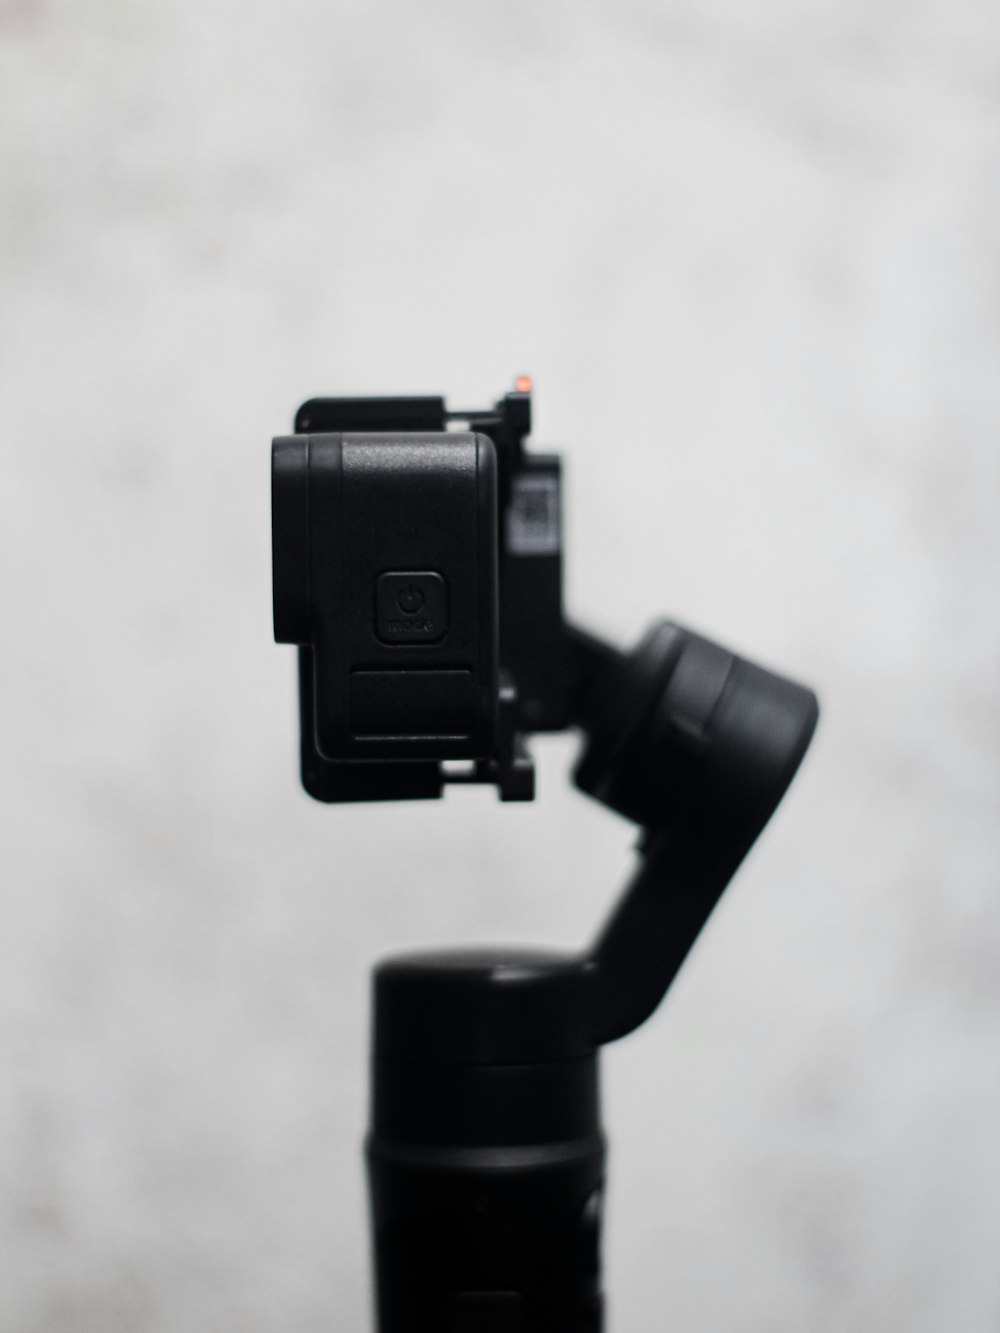 a small camera attached to a tripod